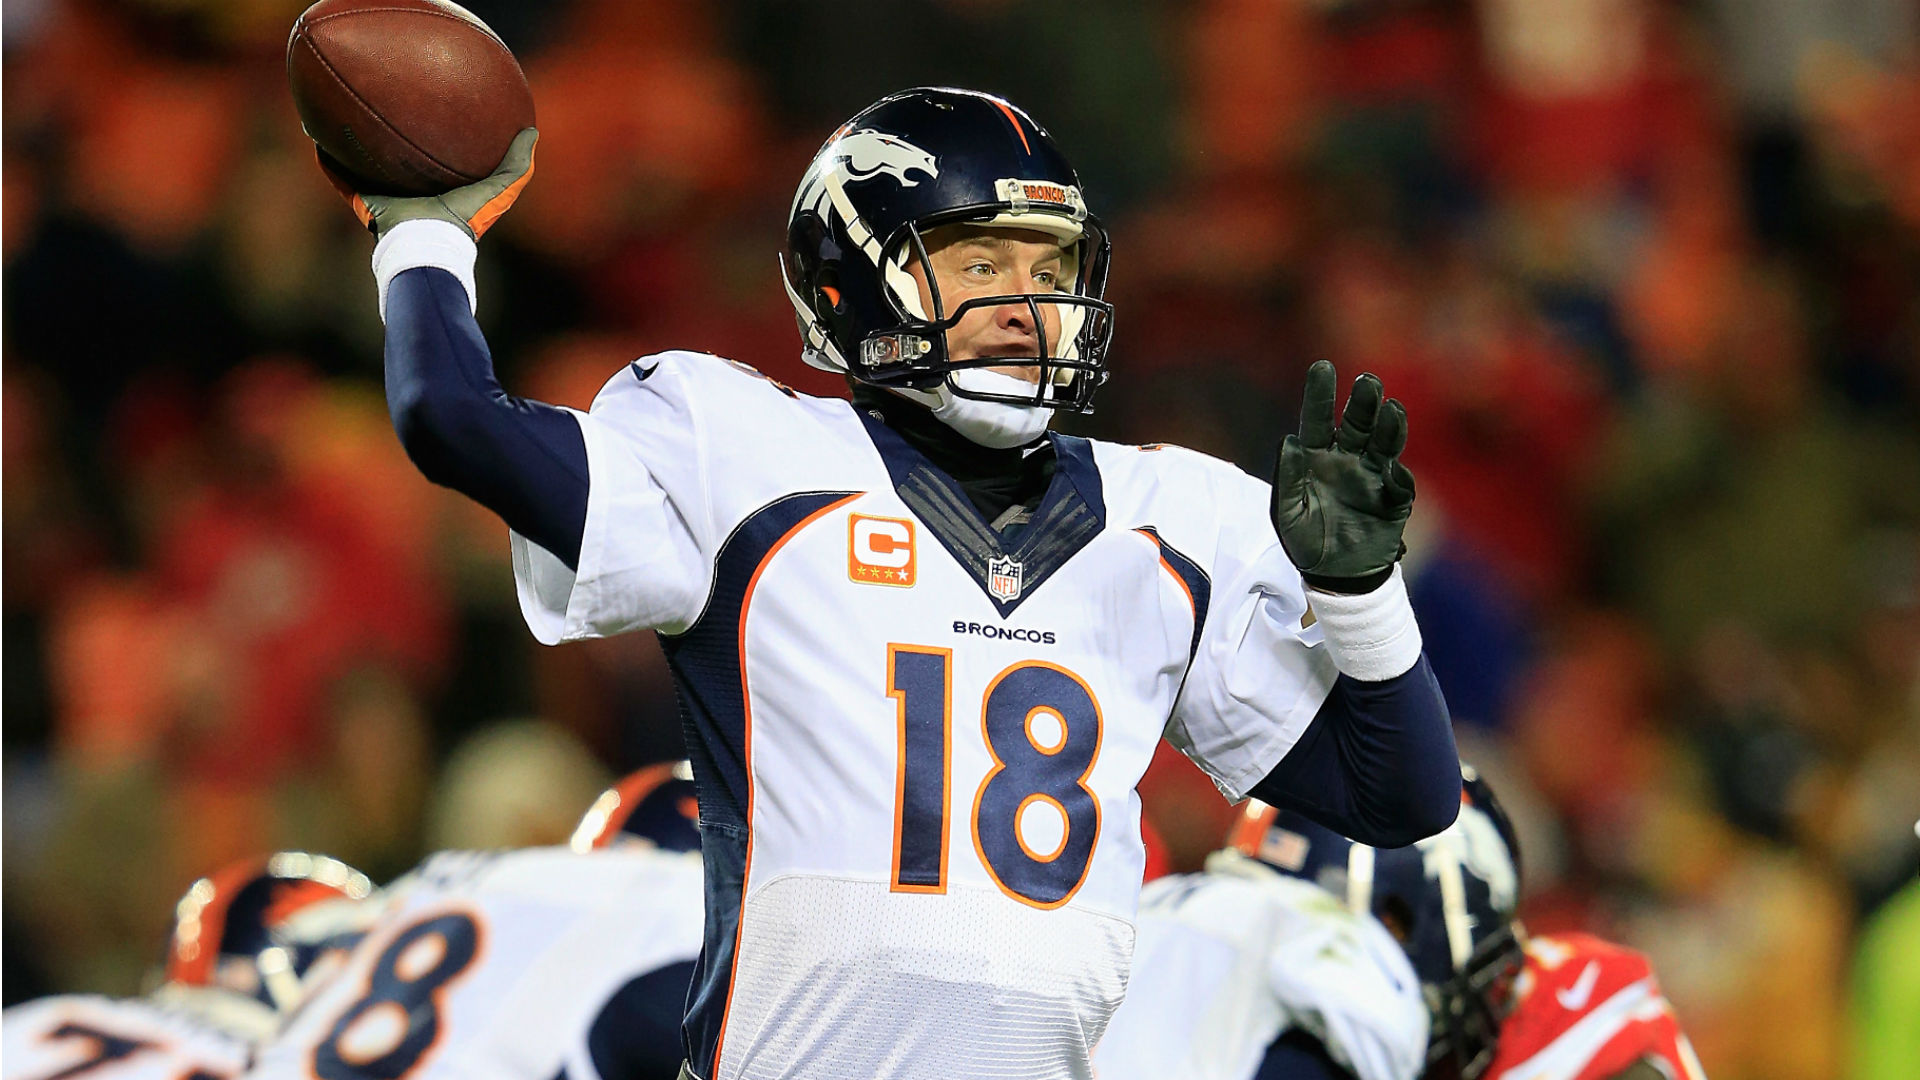 Peyton Manning leads Pro Bowl voting as balloting nears close | Sporting News